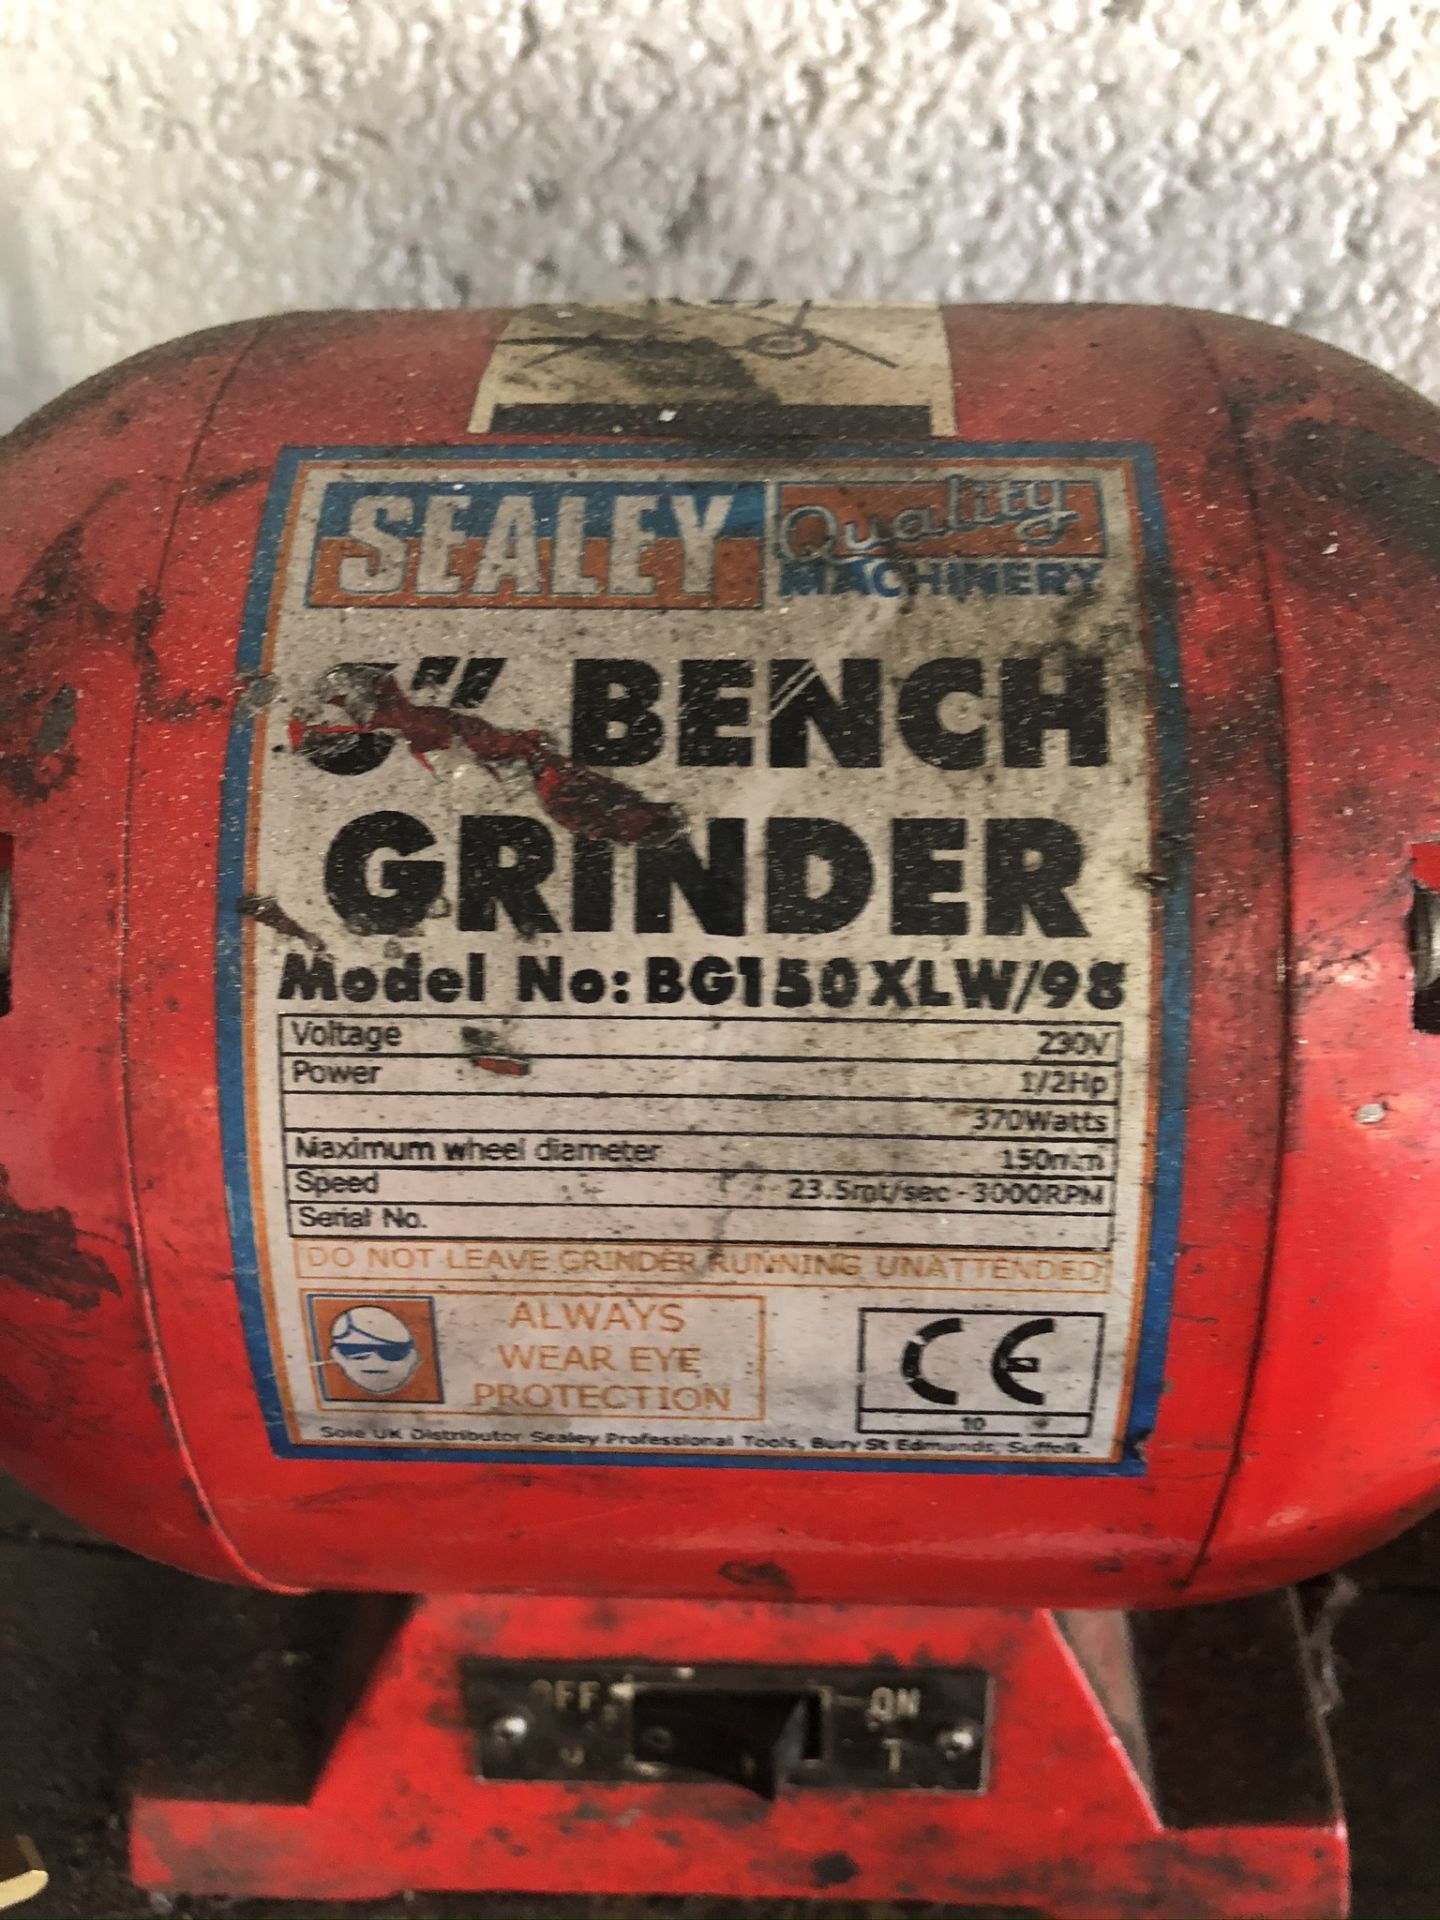 Sealey BG150XLW/95 Double Ended 6" Bench Grinder - Image 2 of 2